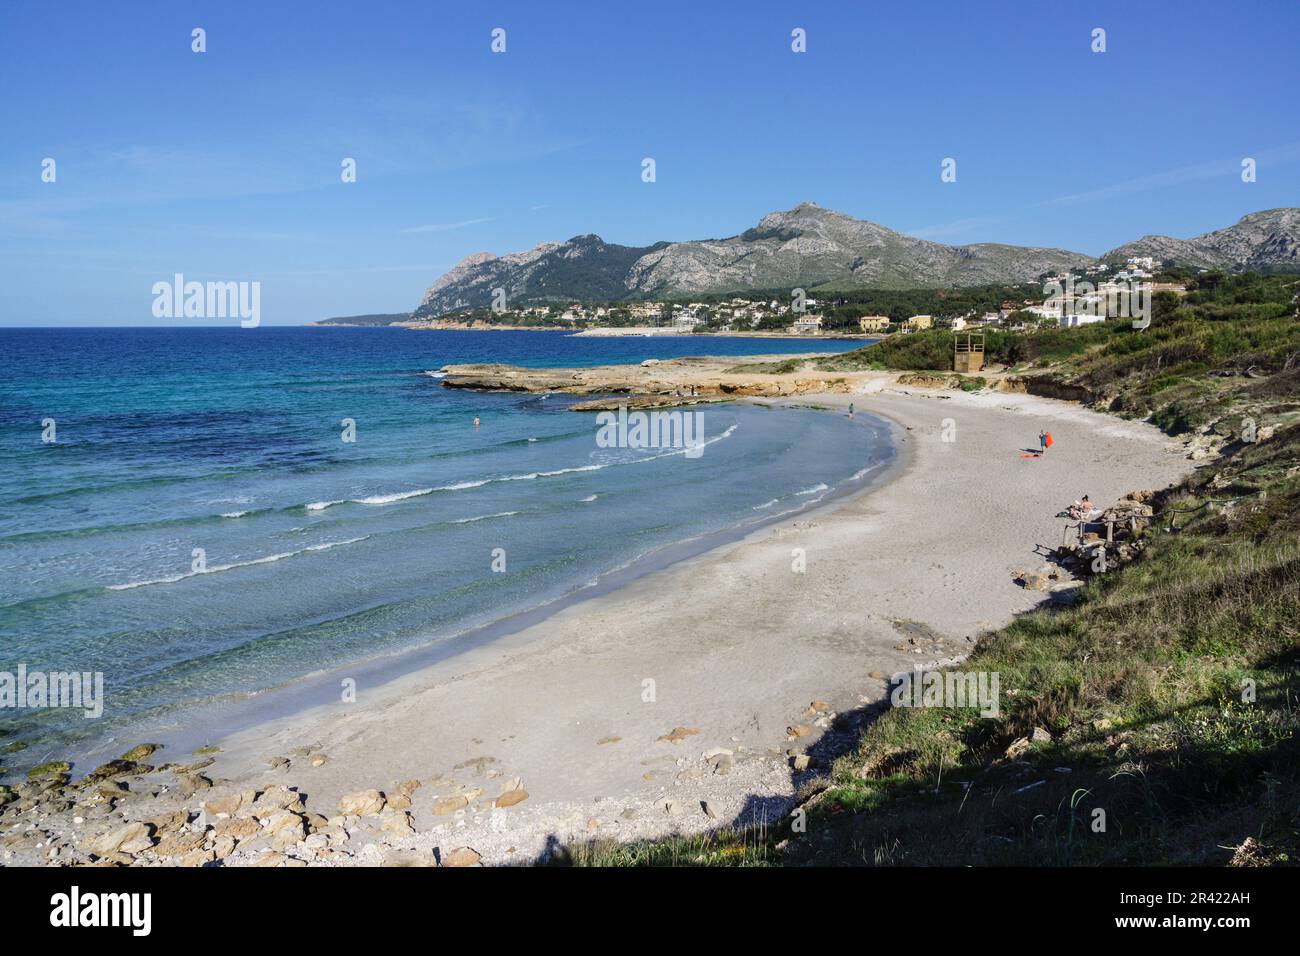 Playa de Sant Joan, Alcudia, Mallorca, Islas Baleares, Espagne Photo Stock  - Alamy